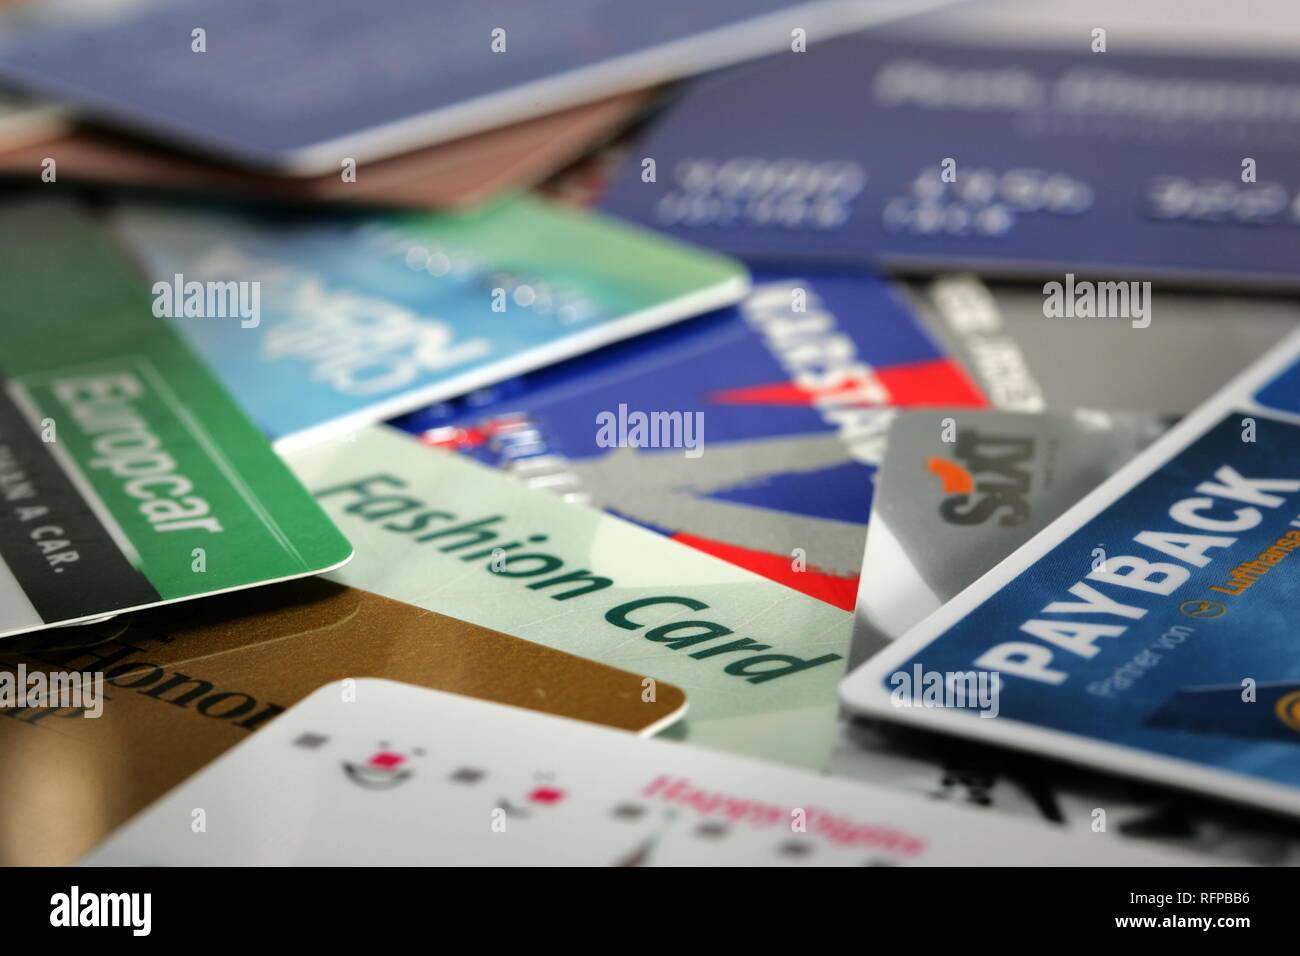 DEU, Deutschland: Bonuskarten, Rabatt Karten von mehreren companys. Stockfoto